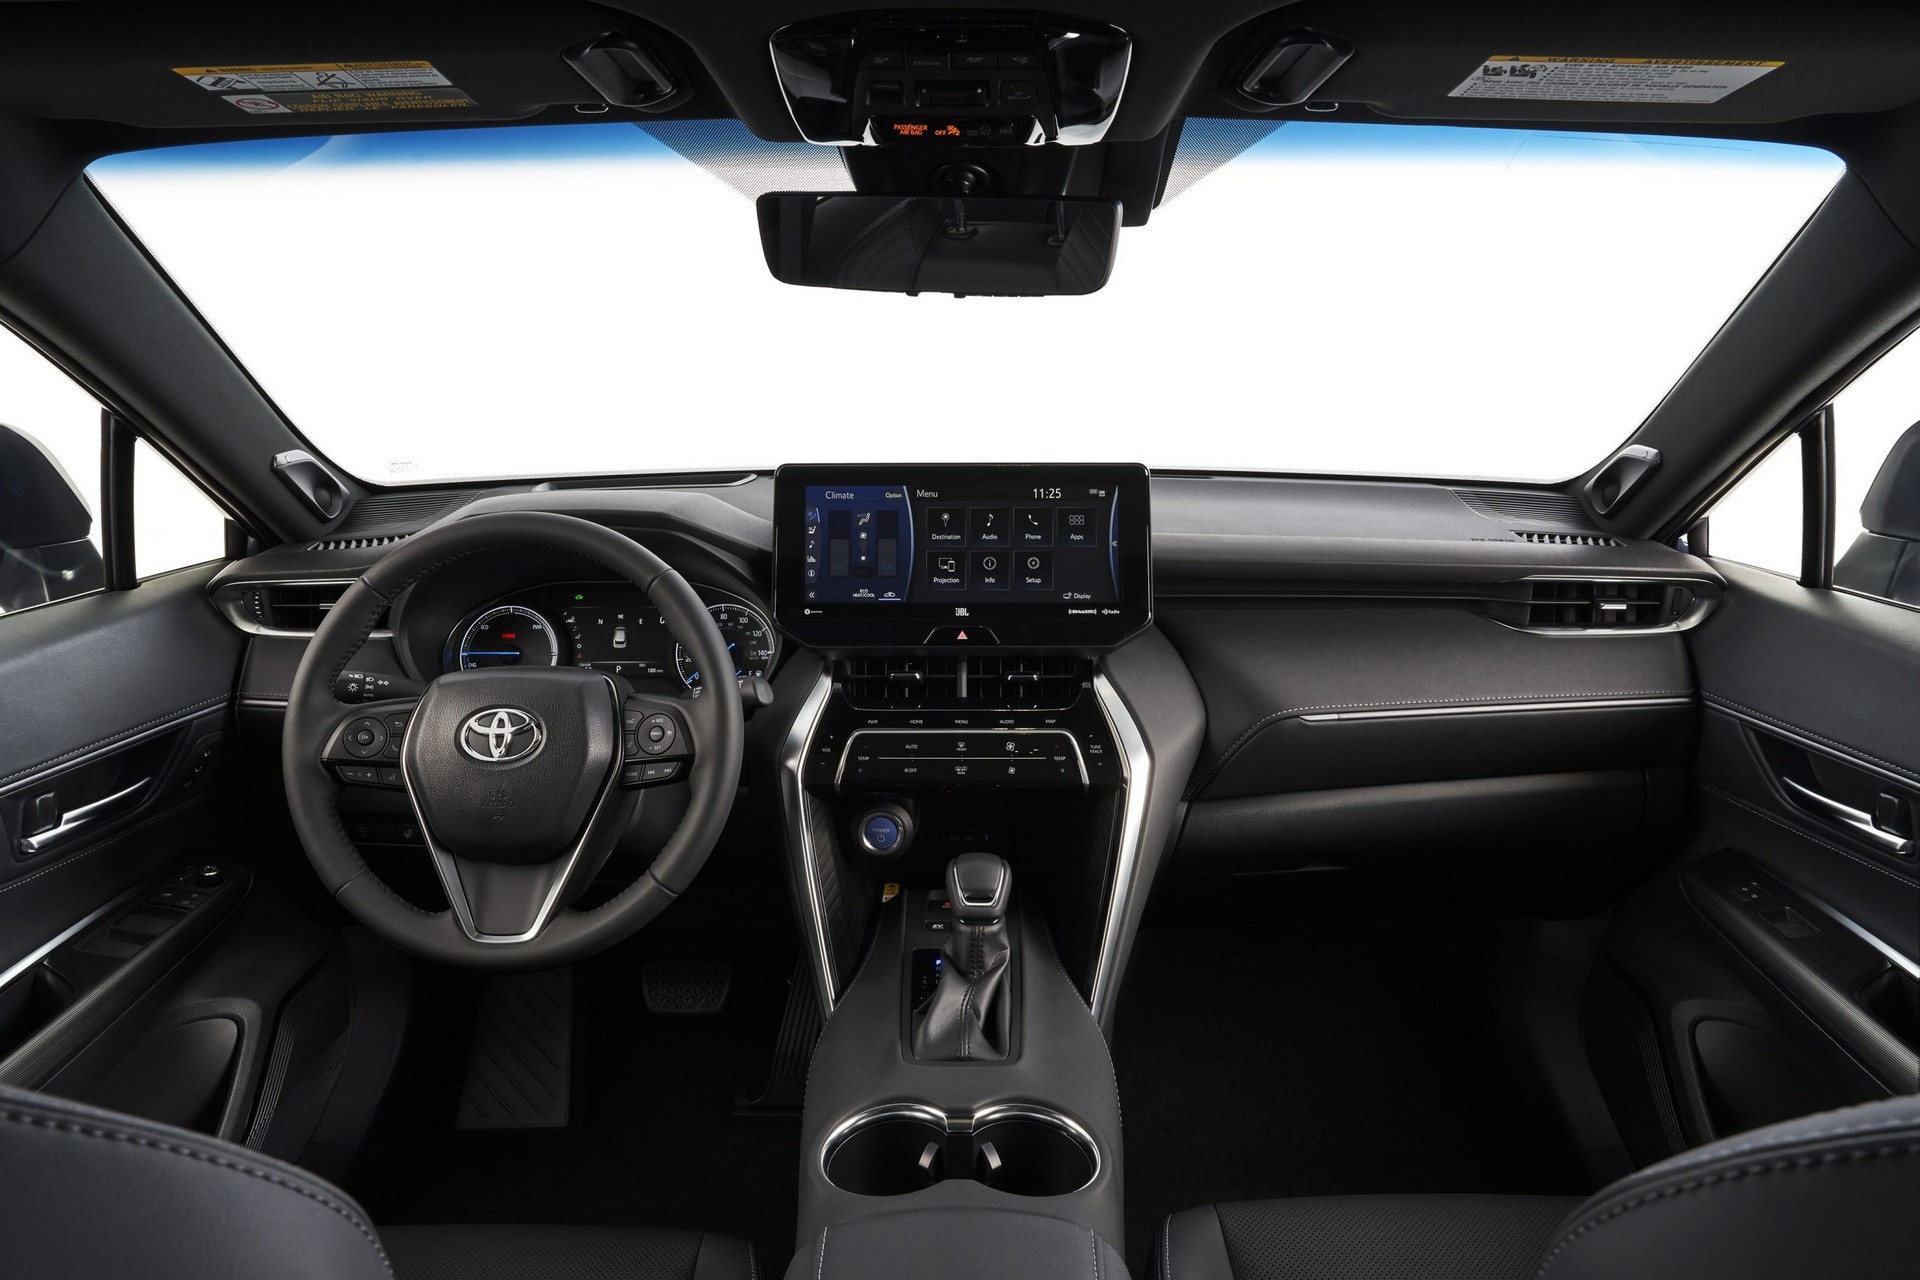 Toyota Venza 2021 คัมแบ็กพร้อมระบบไฮบริดครั้งแรก หลังหายหน้าหายตาไปกว่า 5 ปี